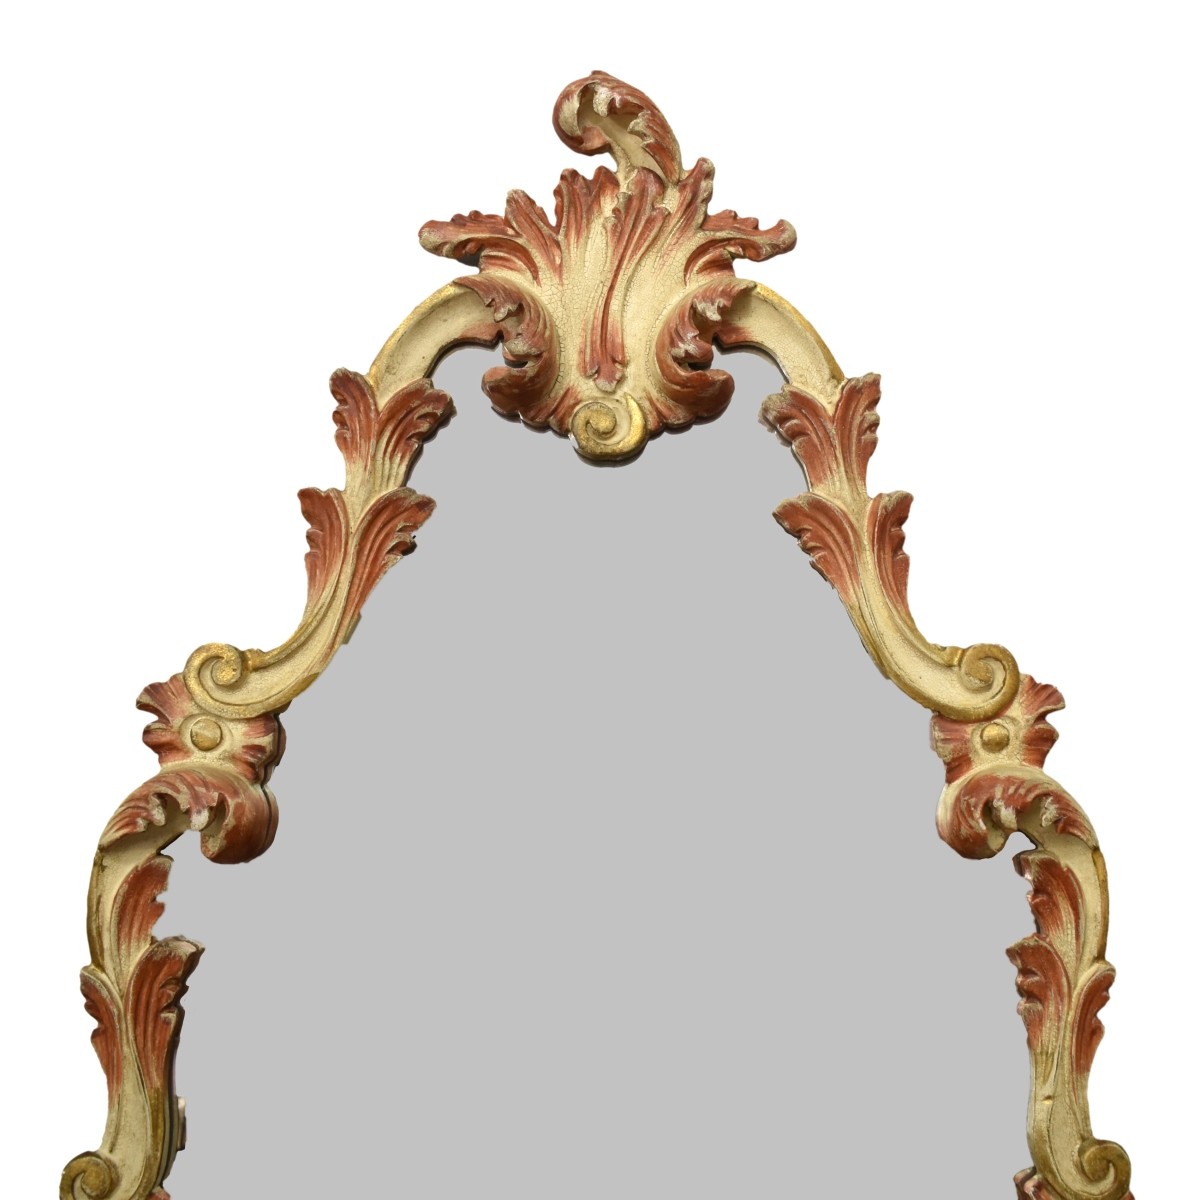 Mid 20th C. Venetian Style Dresser w/ Mirror